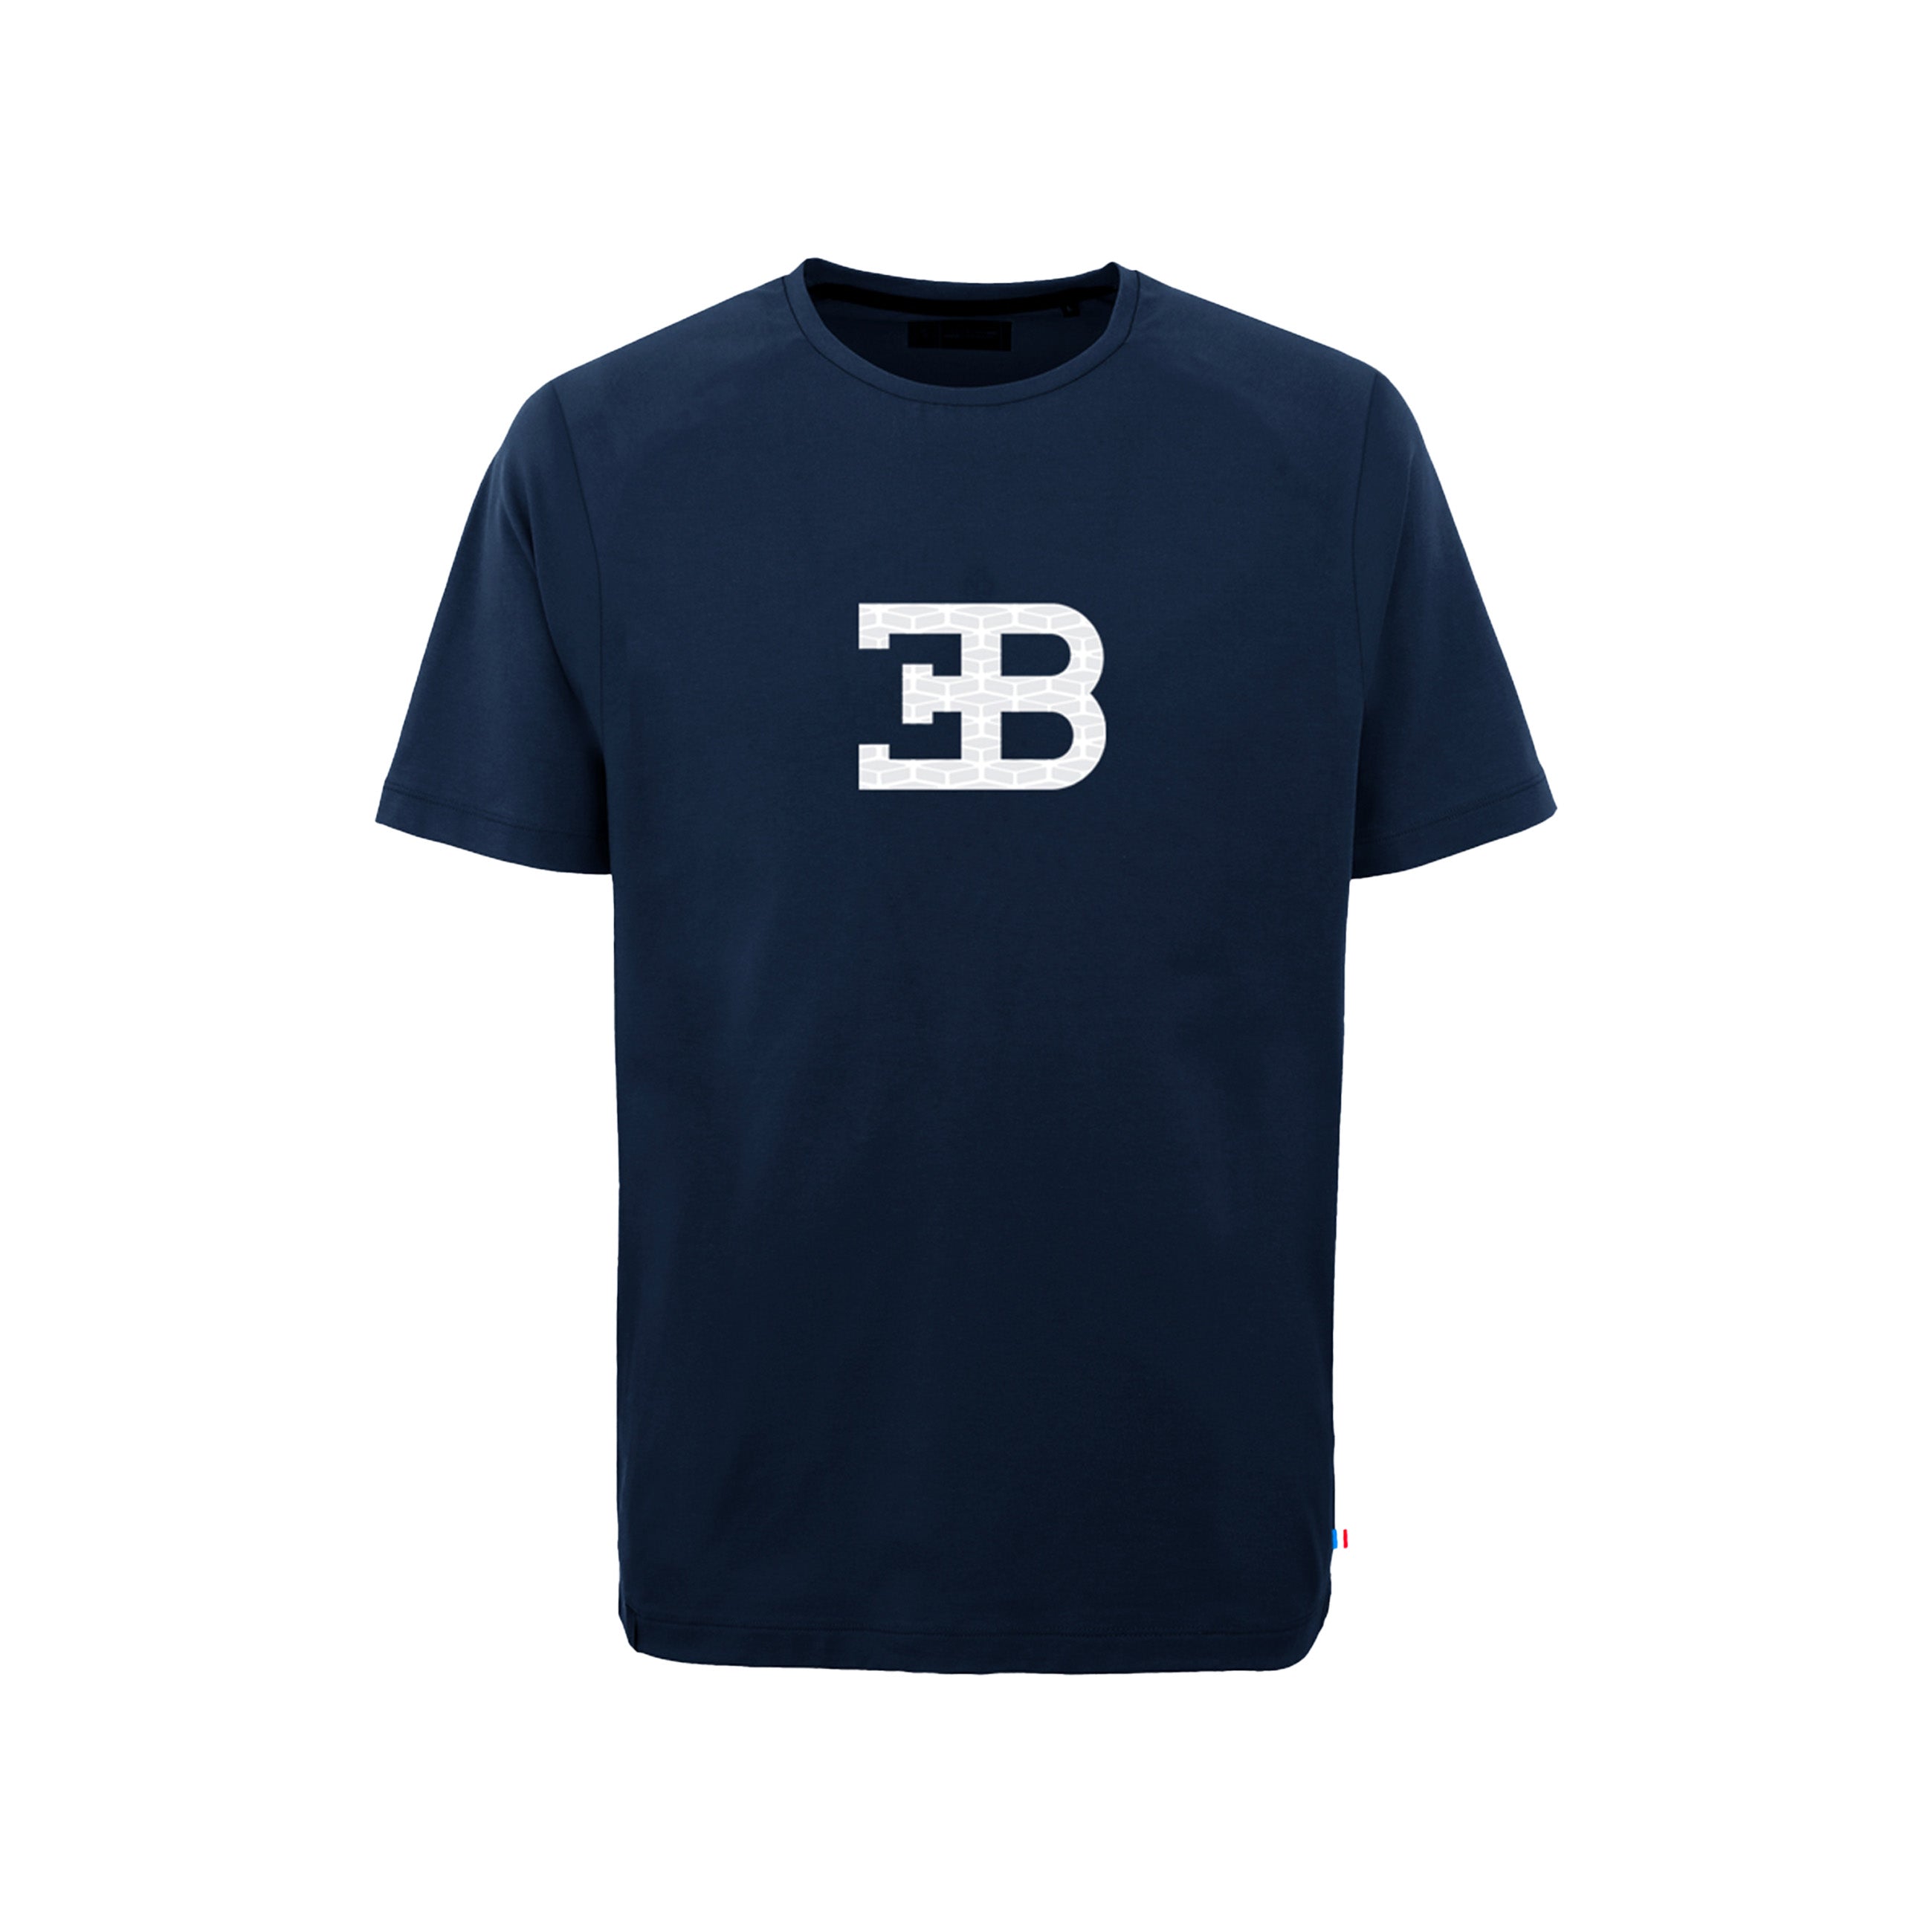 Bugatti Men's "EB" T-Shirt Blue